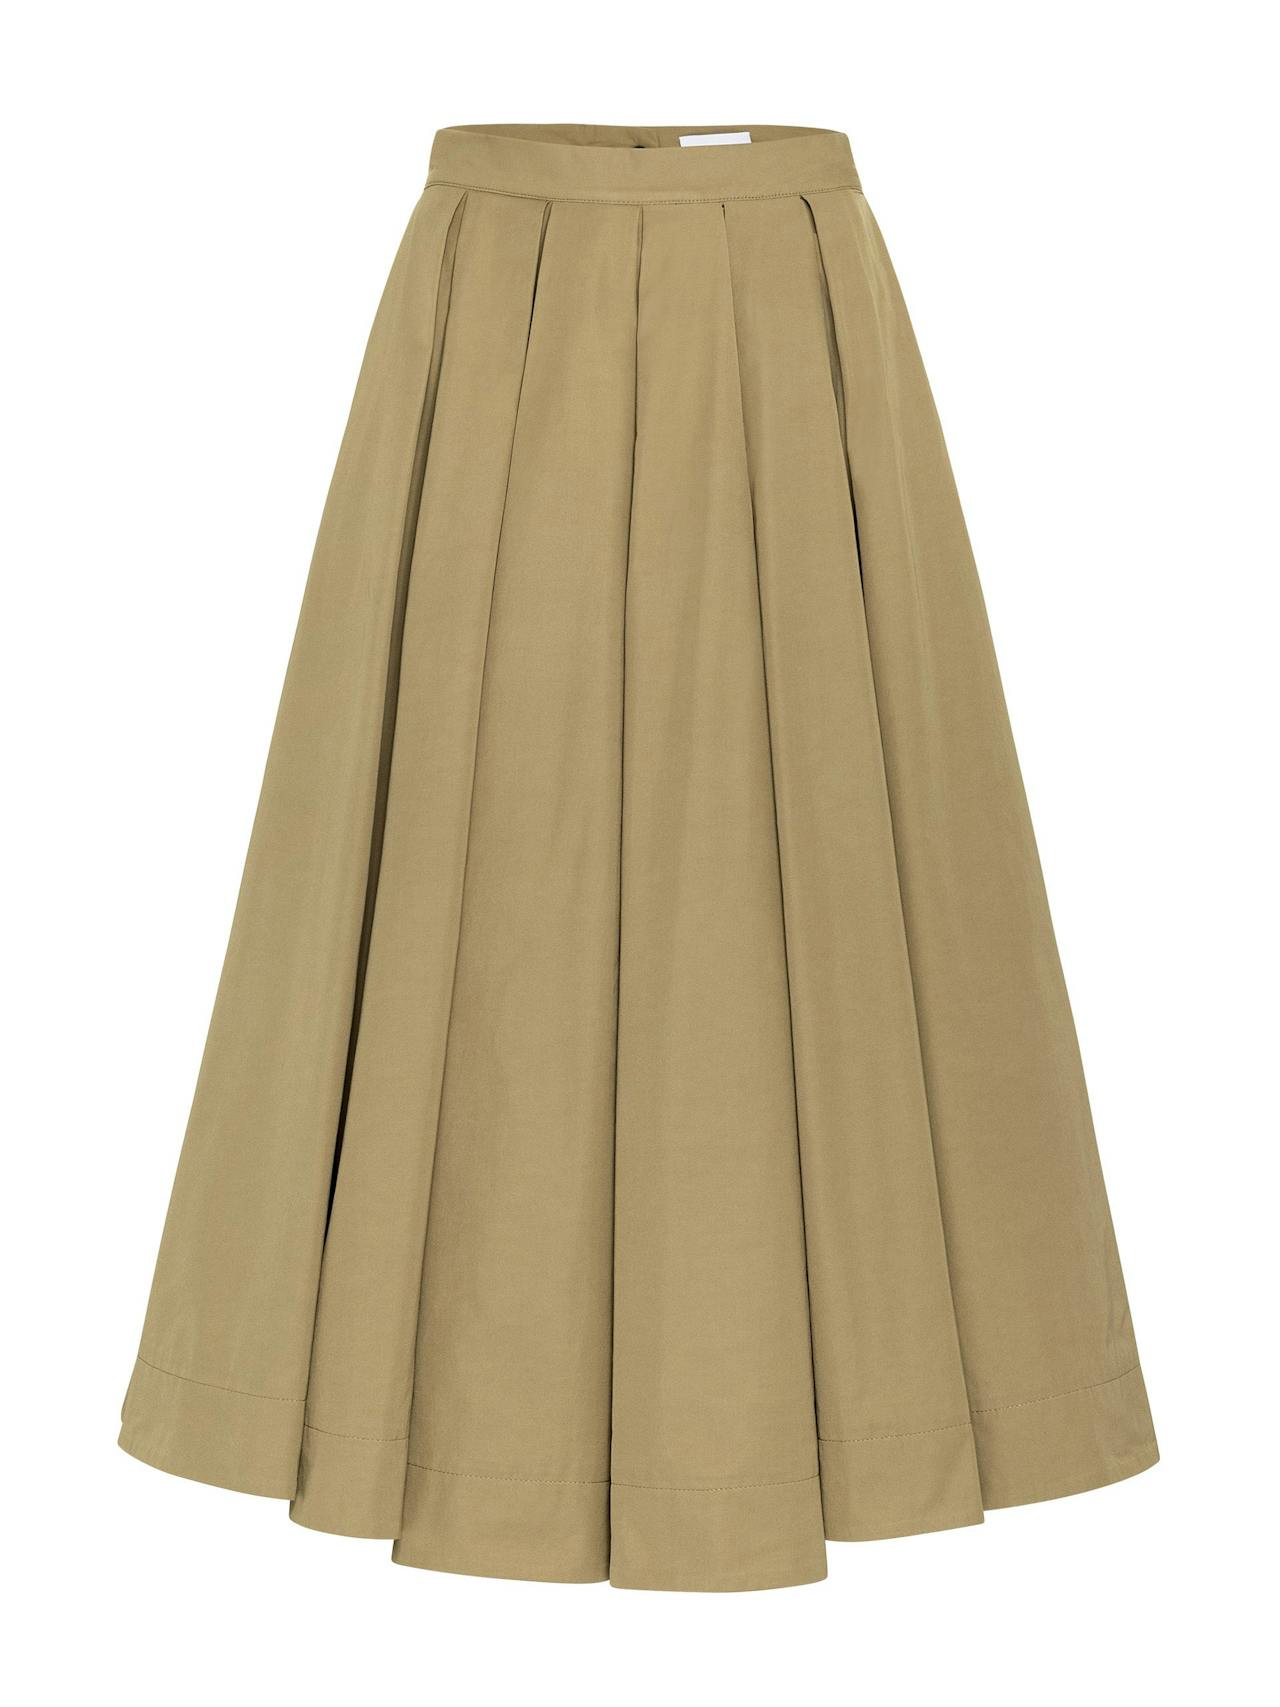 Palofierro skirt